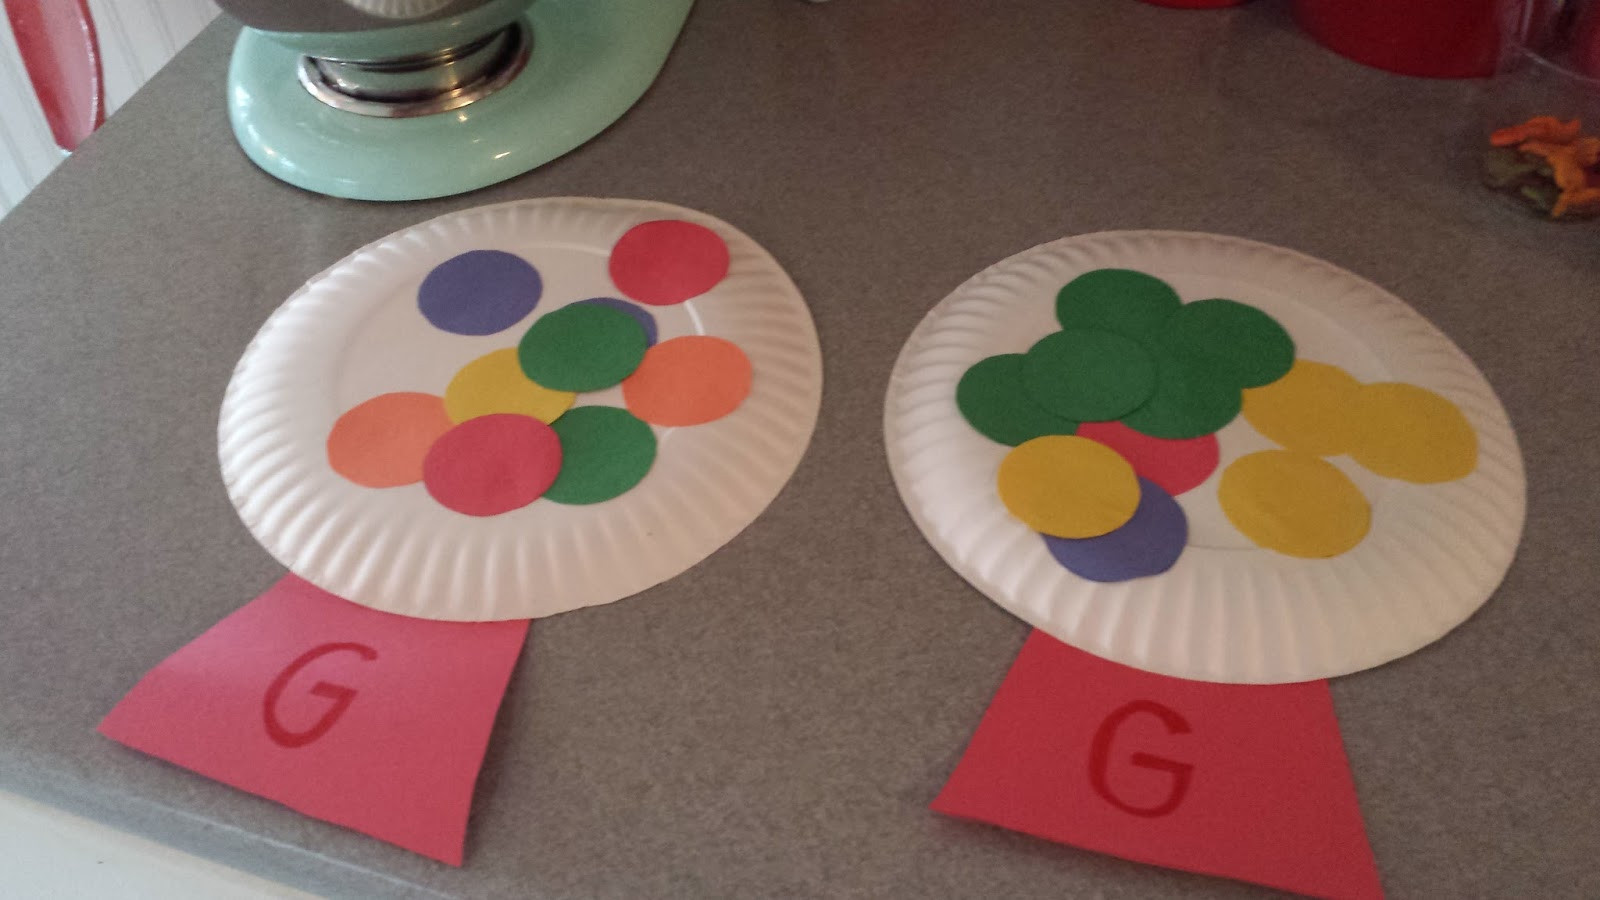 Best ideas about Preschool Craft Ideas
. Save or Pin Letter G Crafts Preschool and Kindergarten Now.